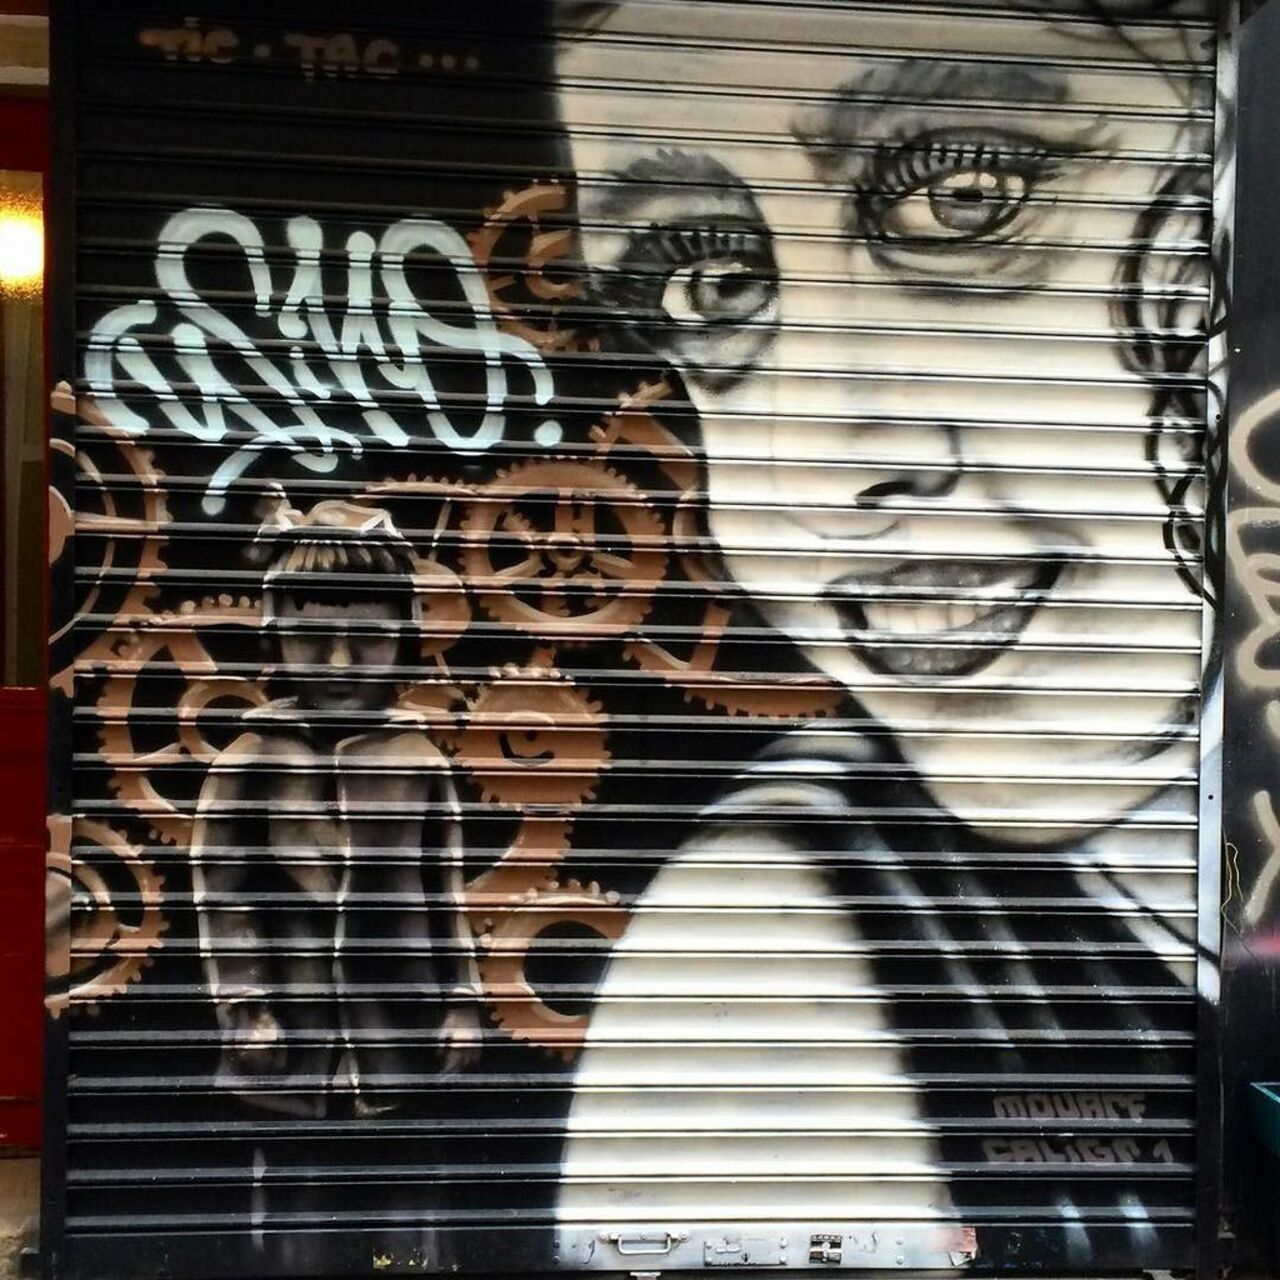 RT @StArtEverywhere: #streetart by @themouarf #mouarf & #caligr #streetartparis #parisstreetart #graffiti #graffitiart by benapix https://t.co/8OnCxtv10k